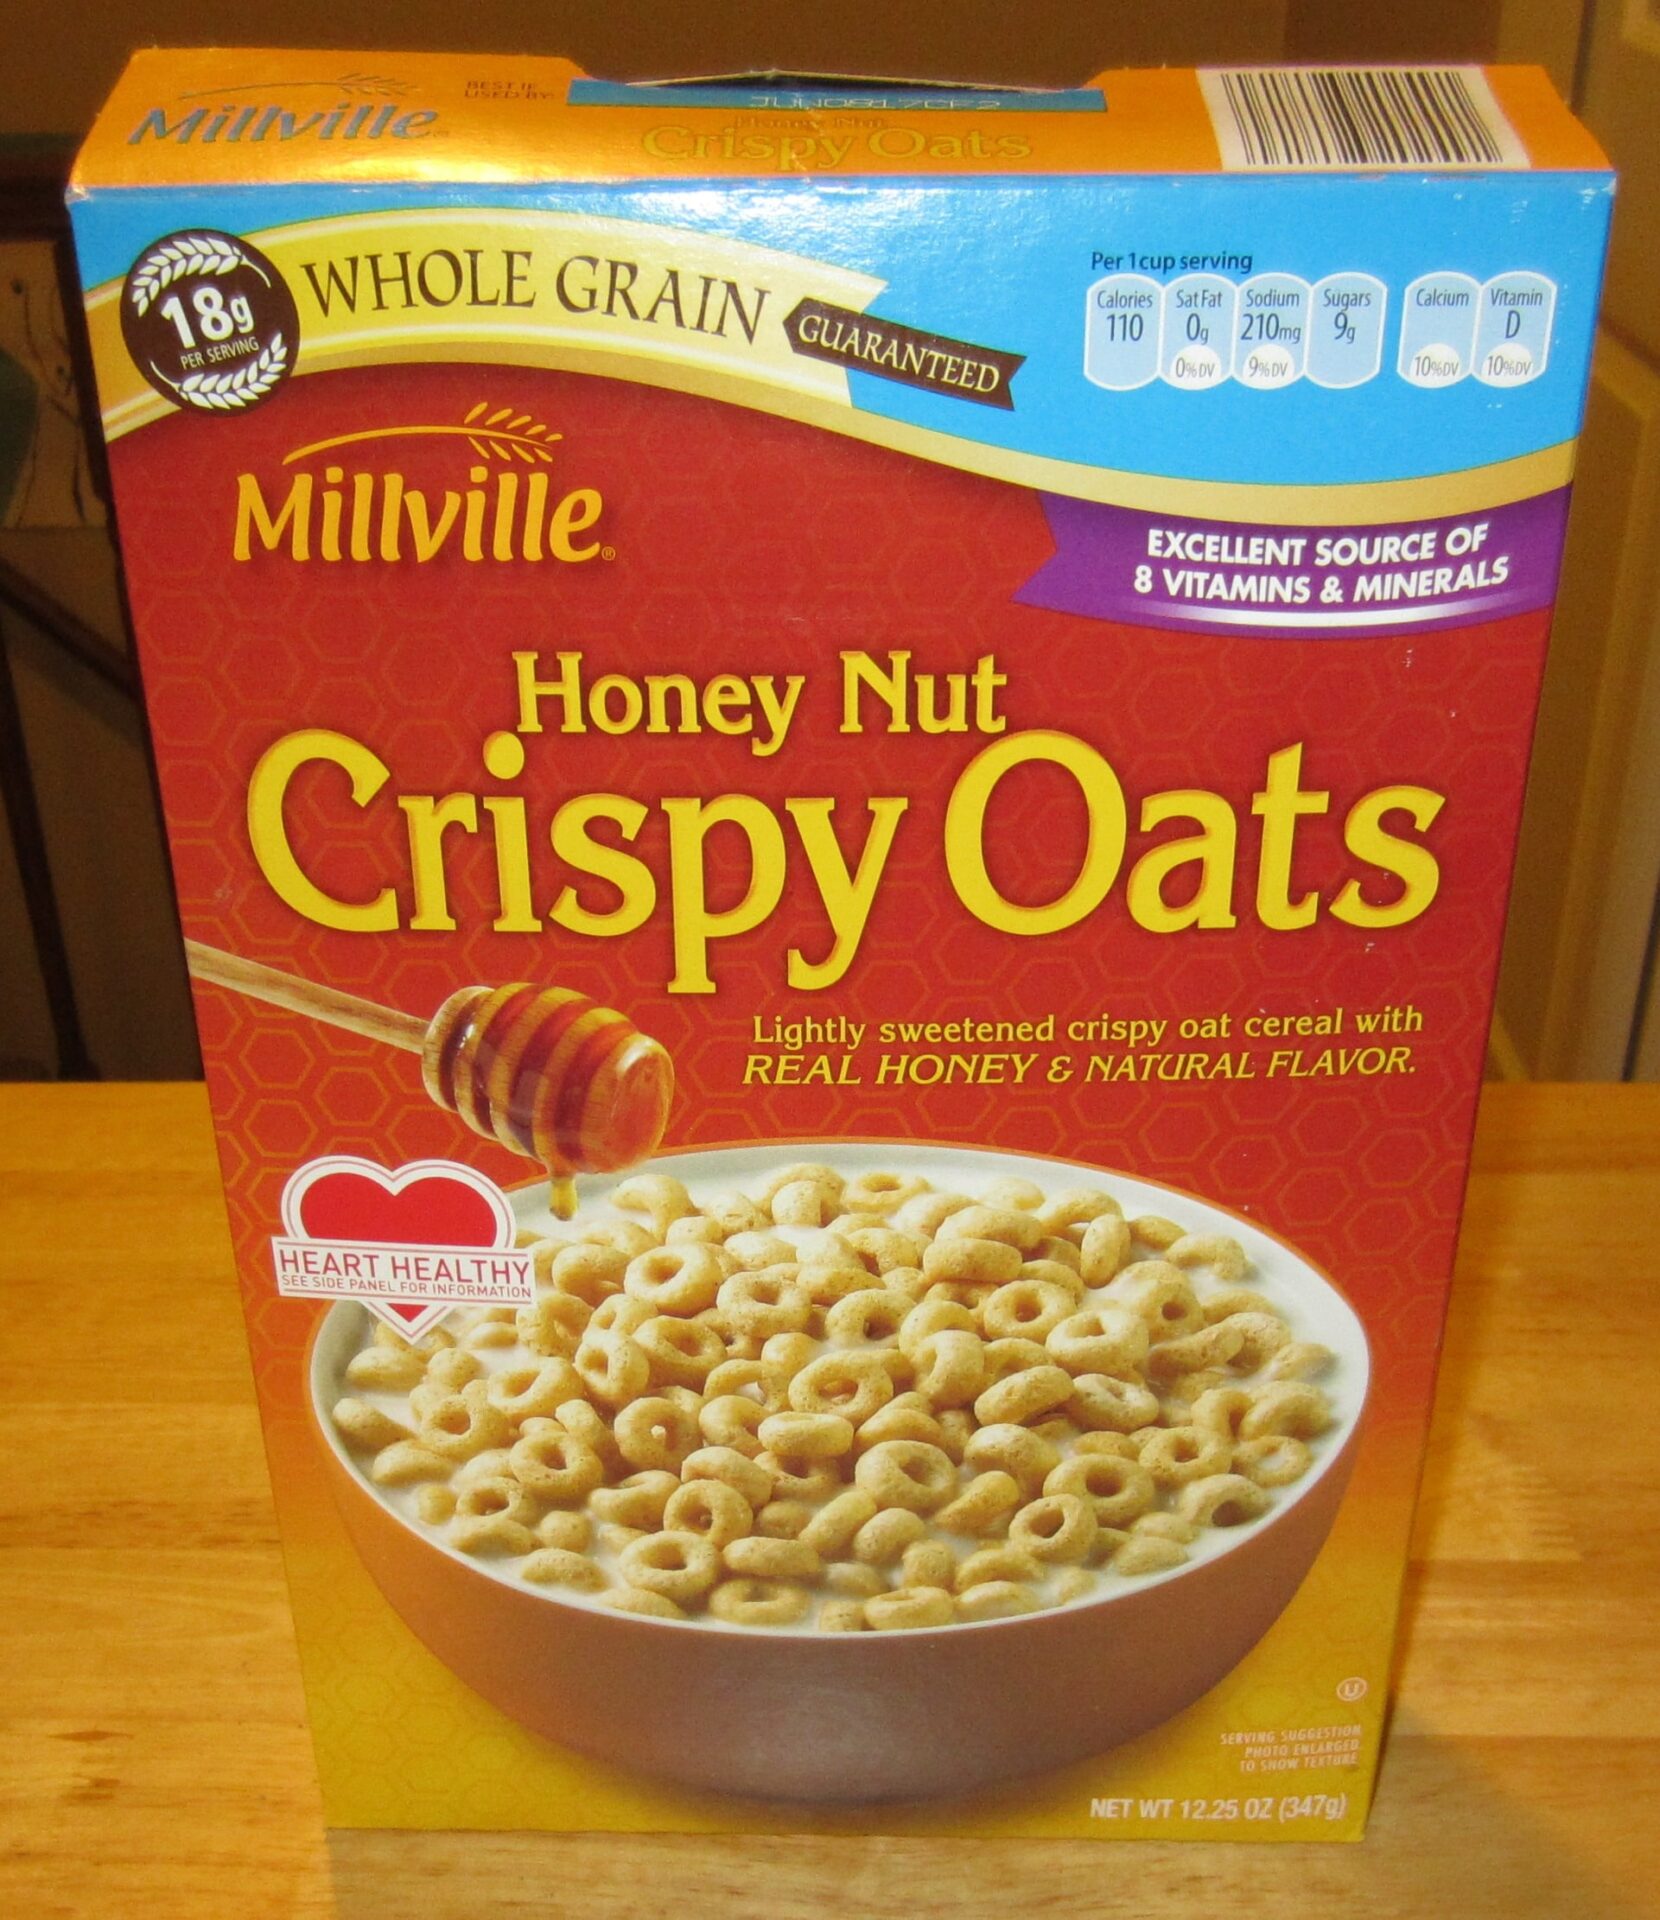 Brand knock-offs, raisin bran cereal, I did a brand knock-o…